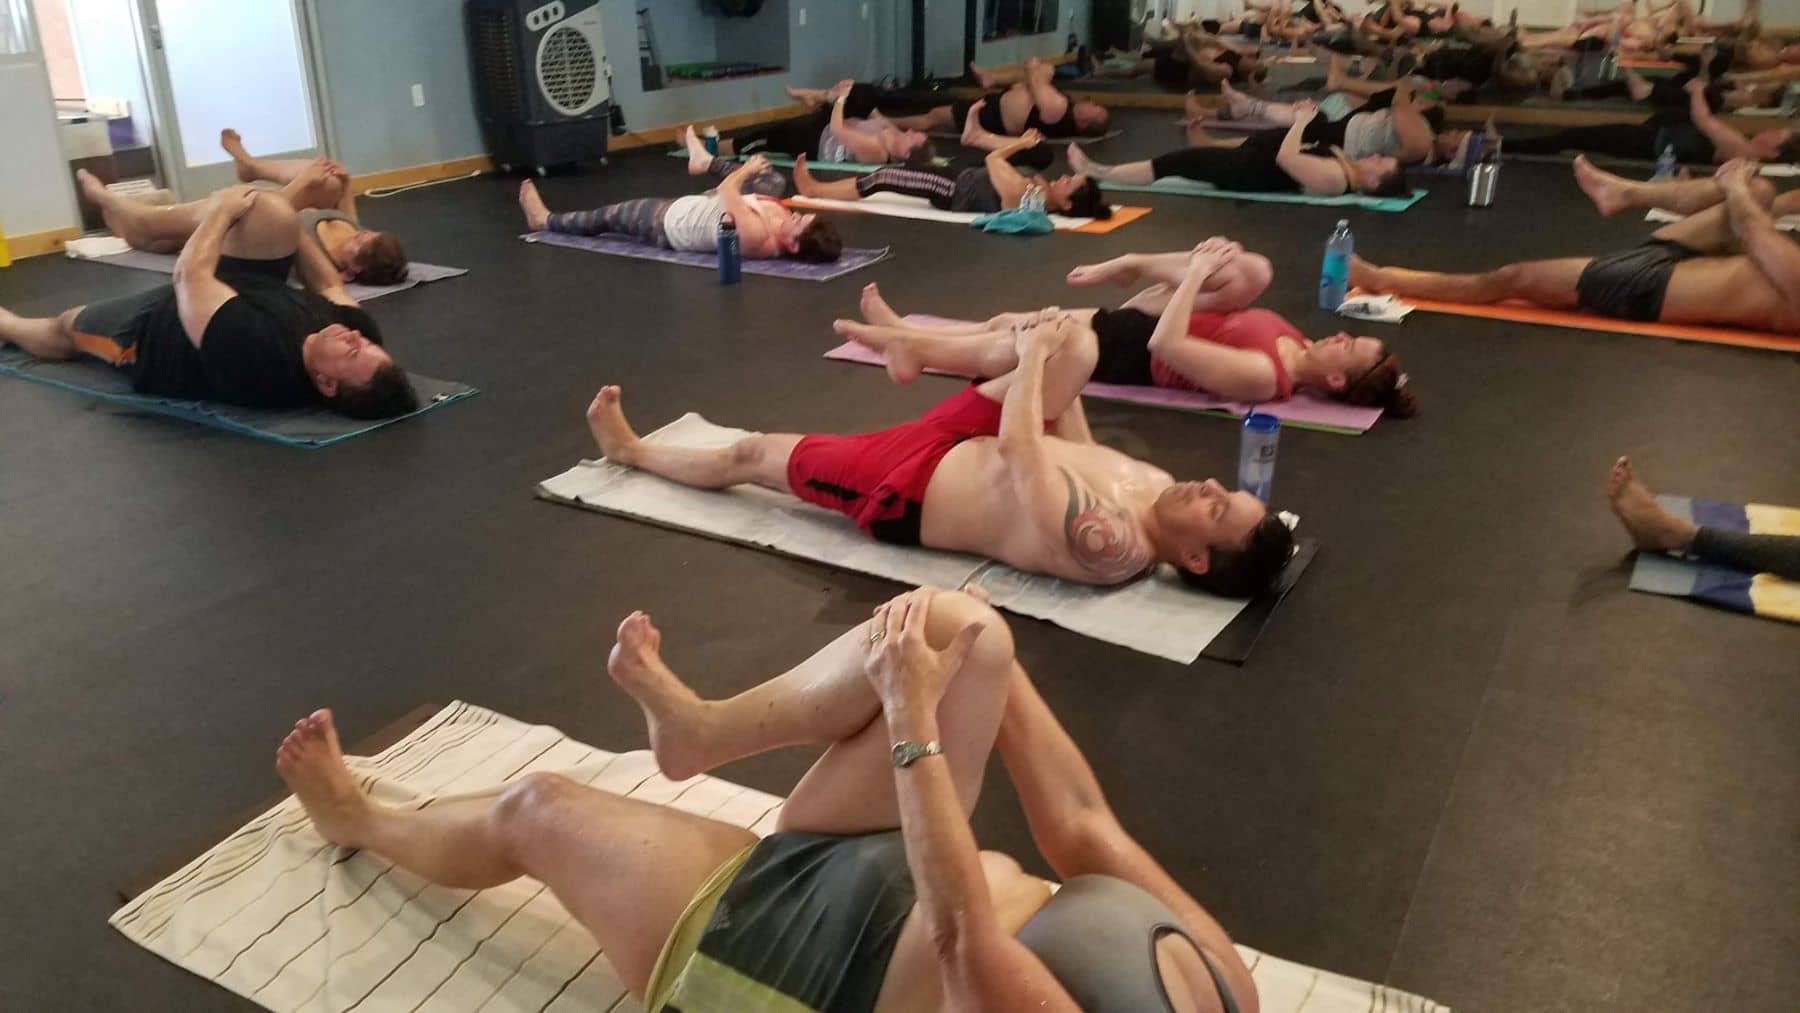 Tummee.com - View the entire Advance Hot Yoga: 84 Yoga Poses at  https://www.tummee.com/yoga-sequences/bikram-yoga-sequence-advanced (Search  “Advance Hot Yoga: 84 Yoga Poses